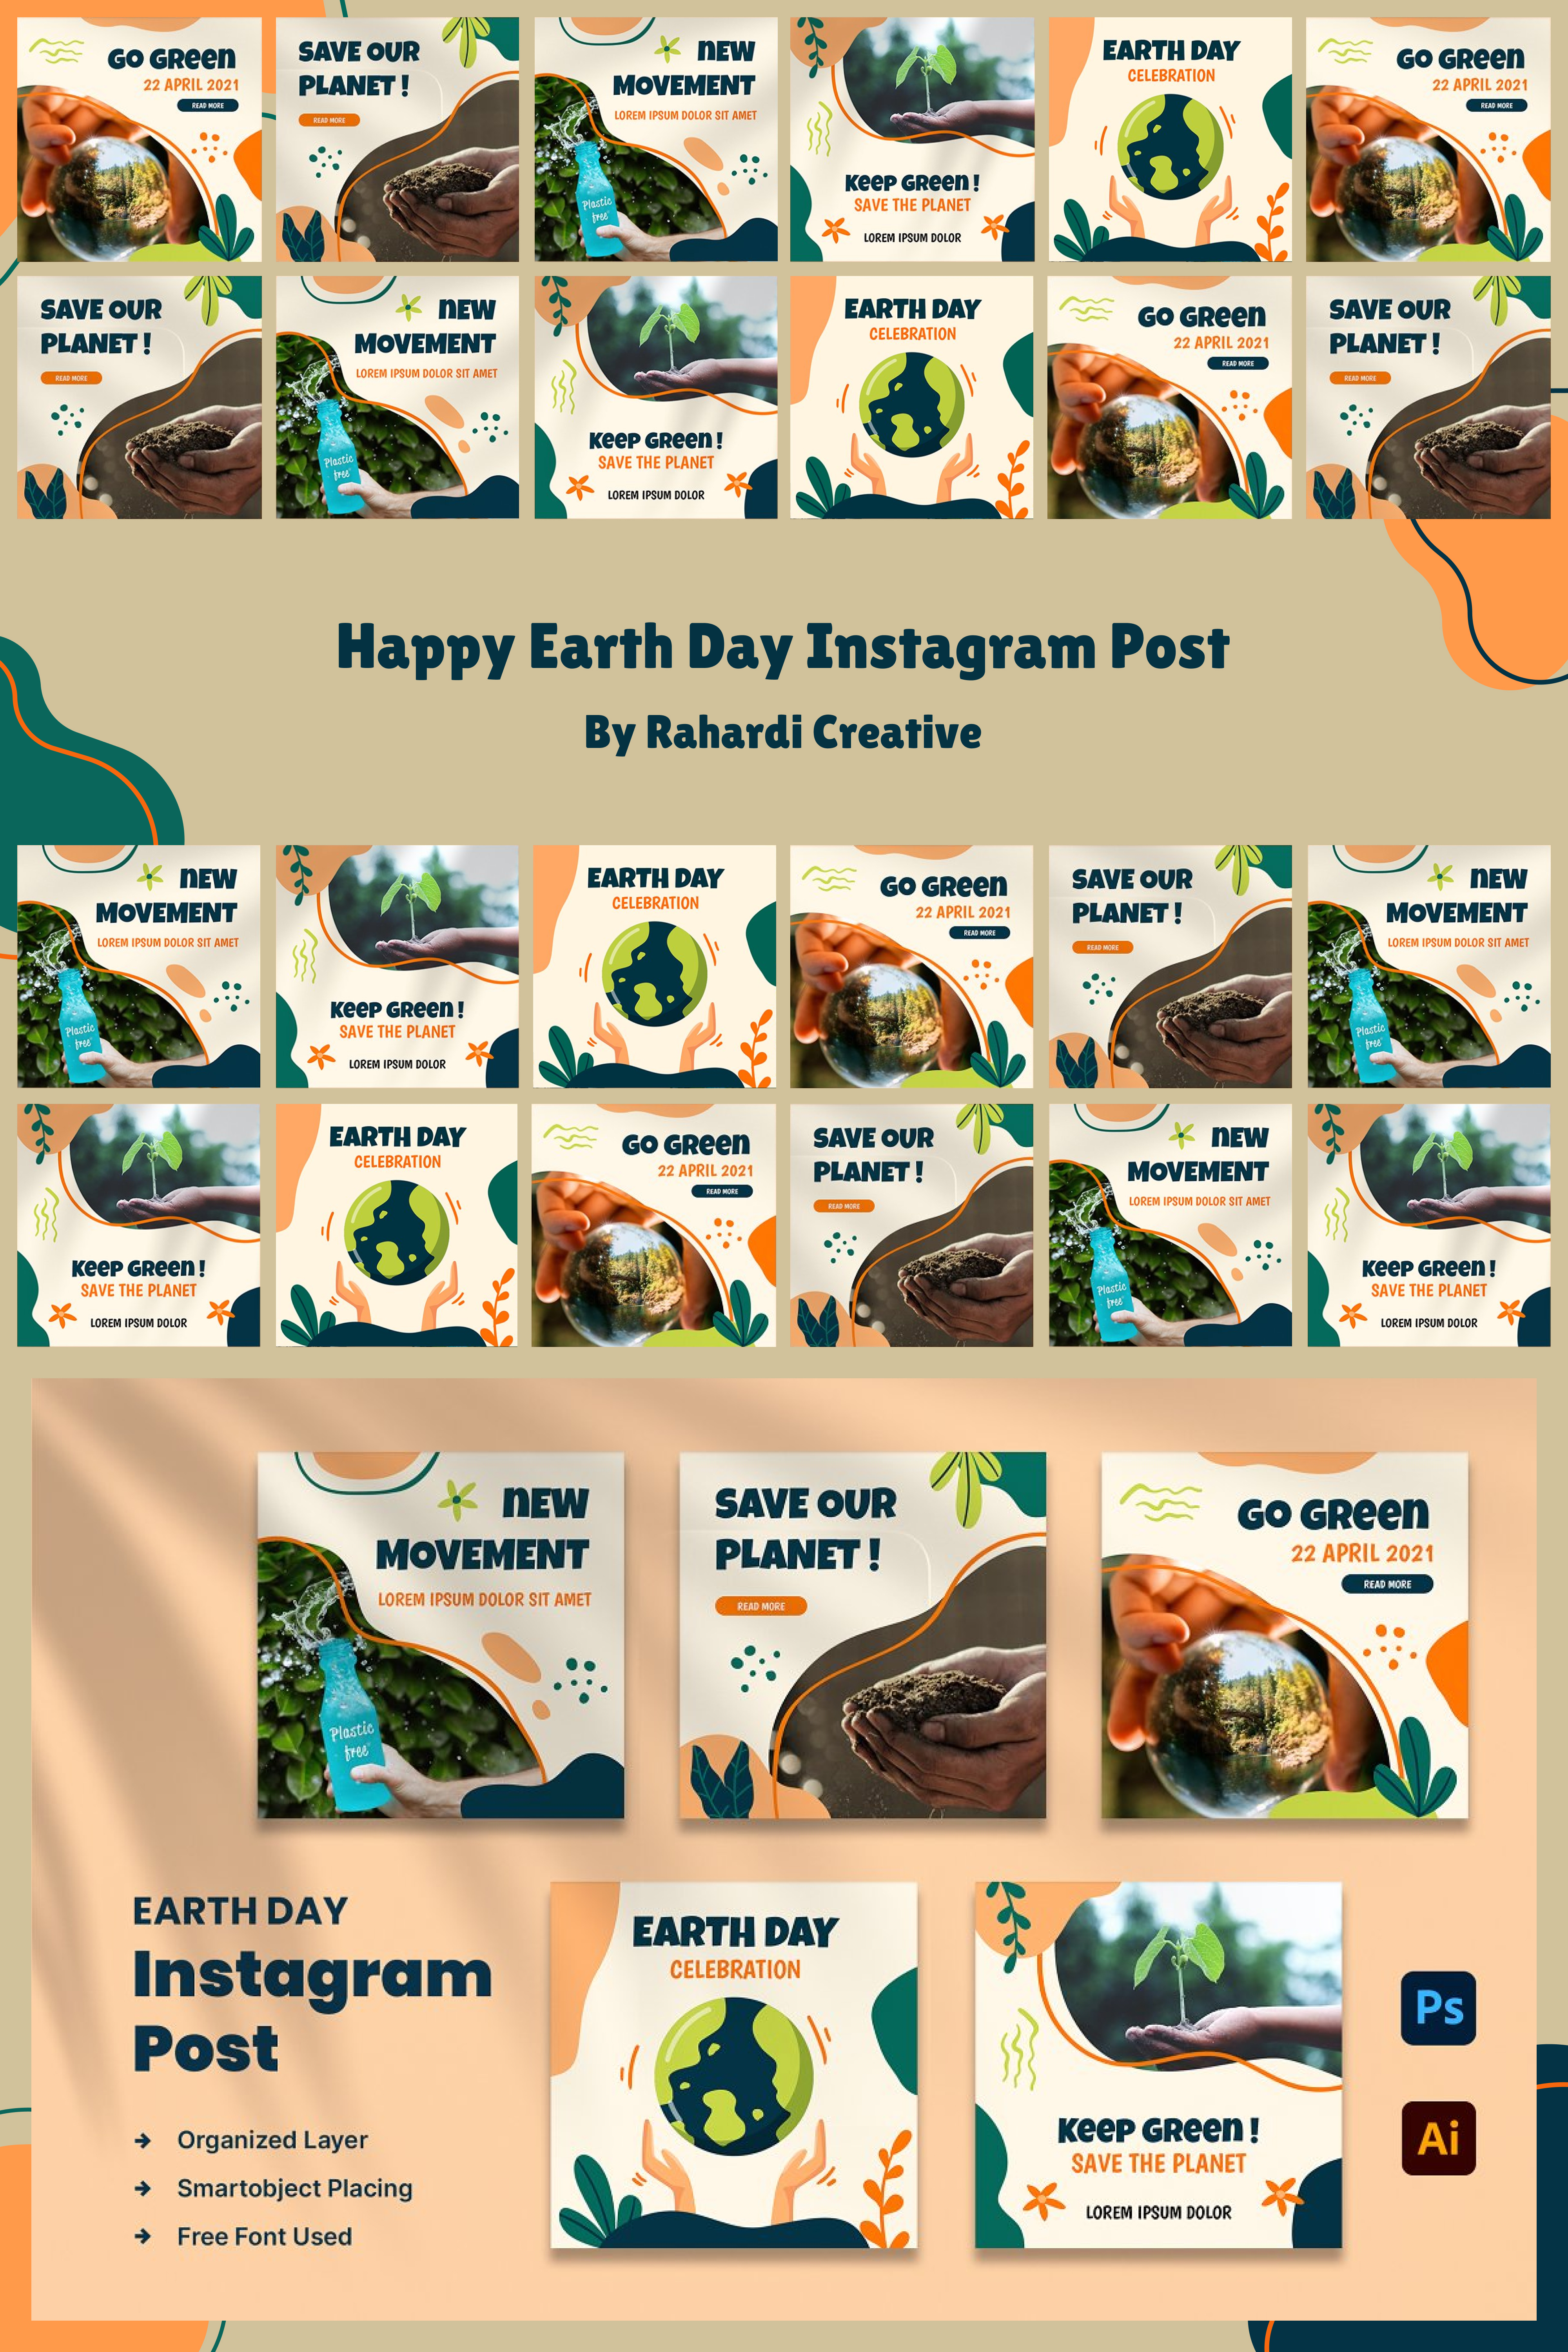 Happy earth day instagram post of pinterest.